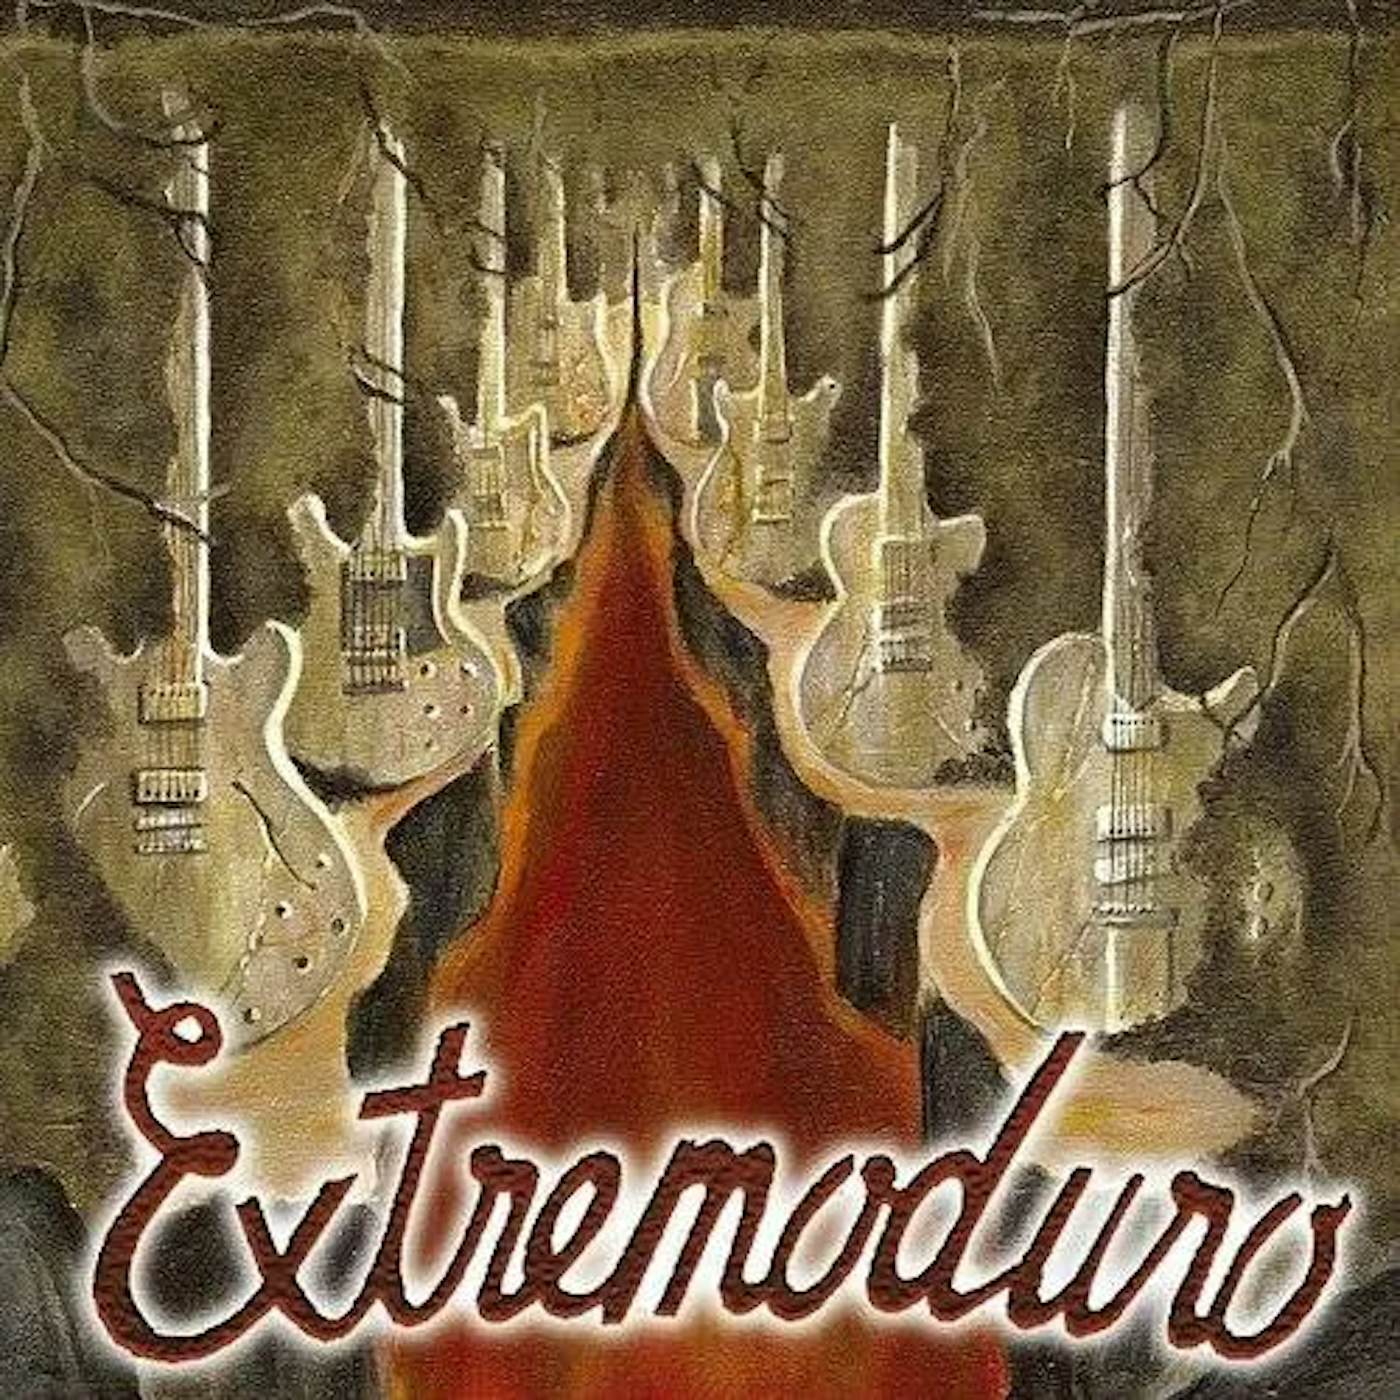 Extremoduro LP Vinilo + CD Rock Transgresivo